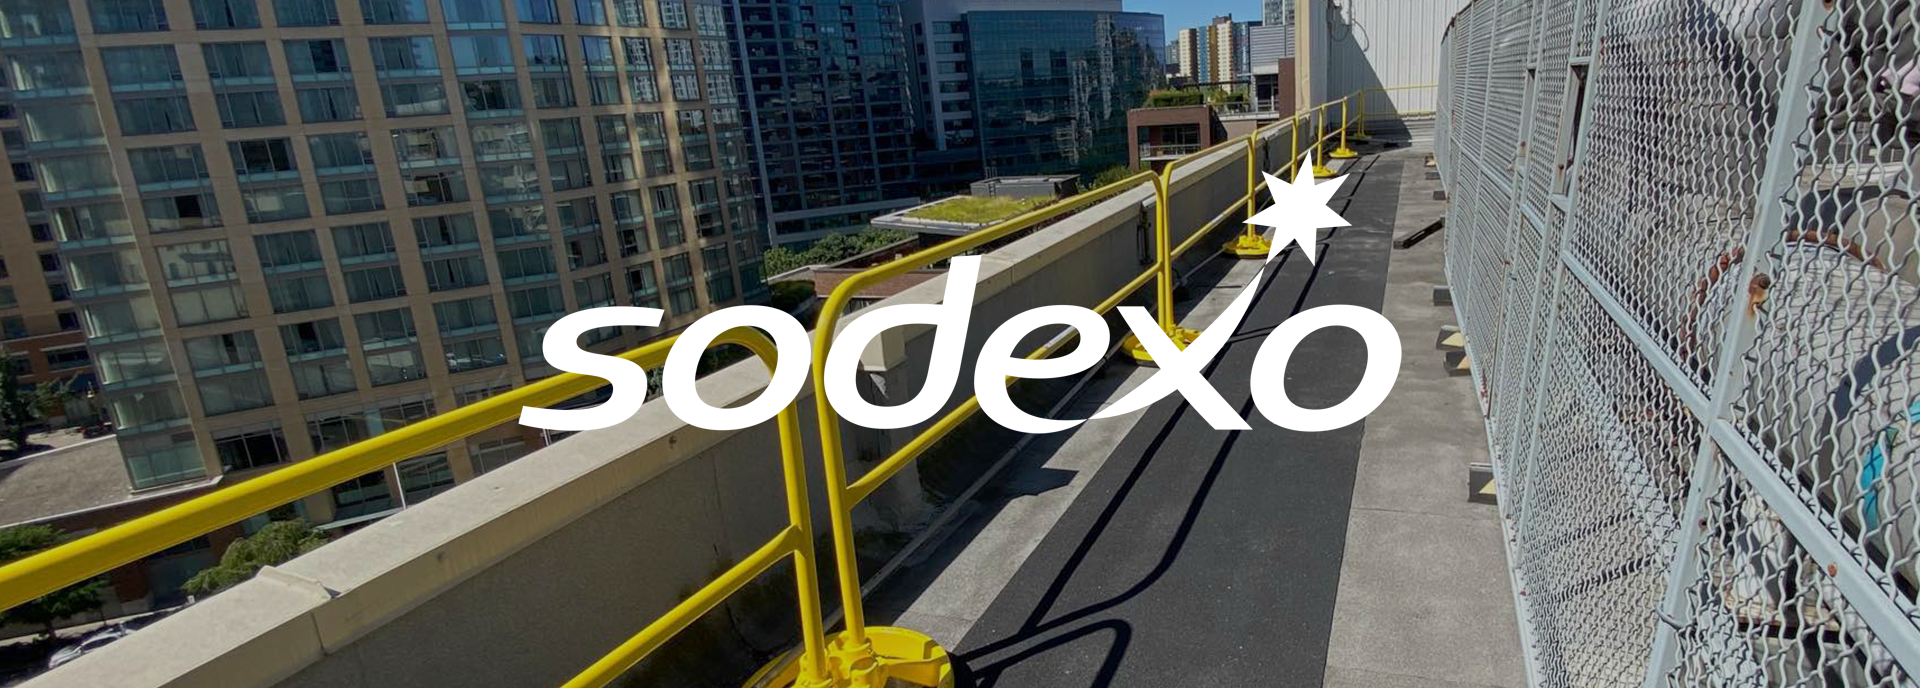 src360 mobile rail for sodexo building